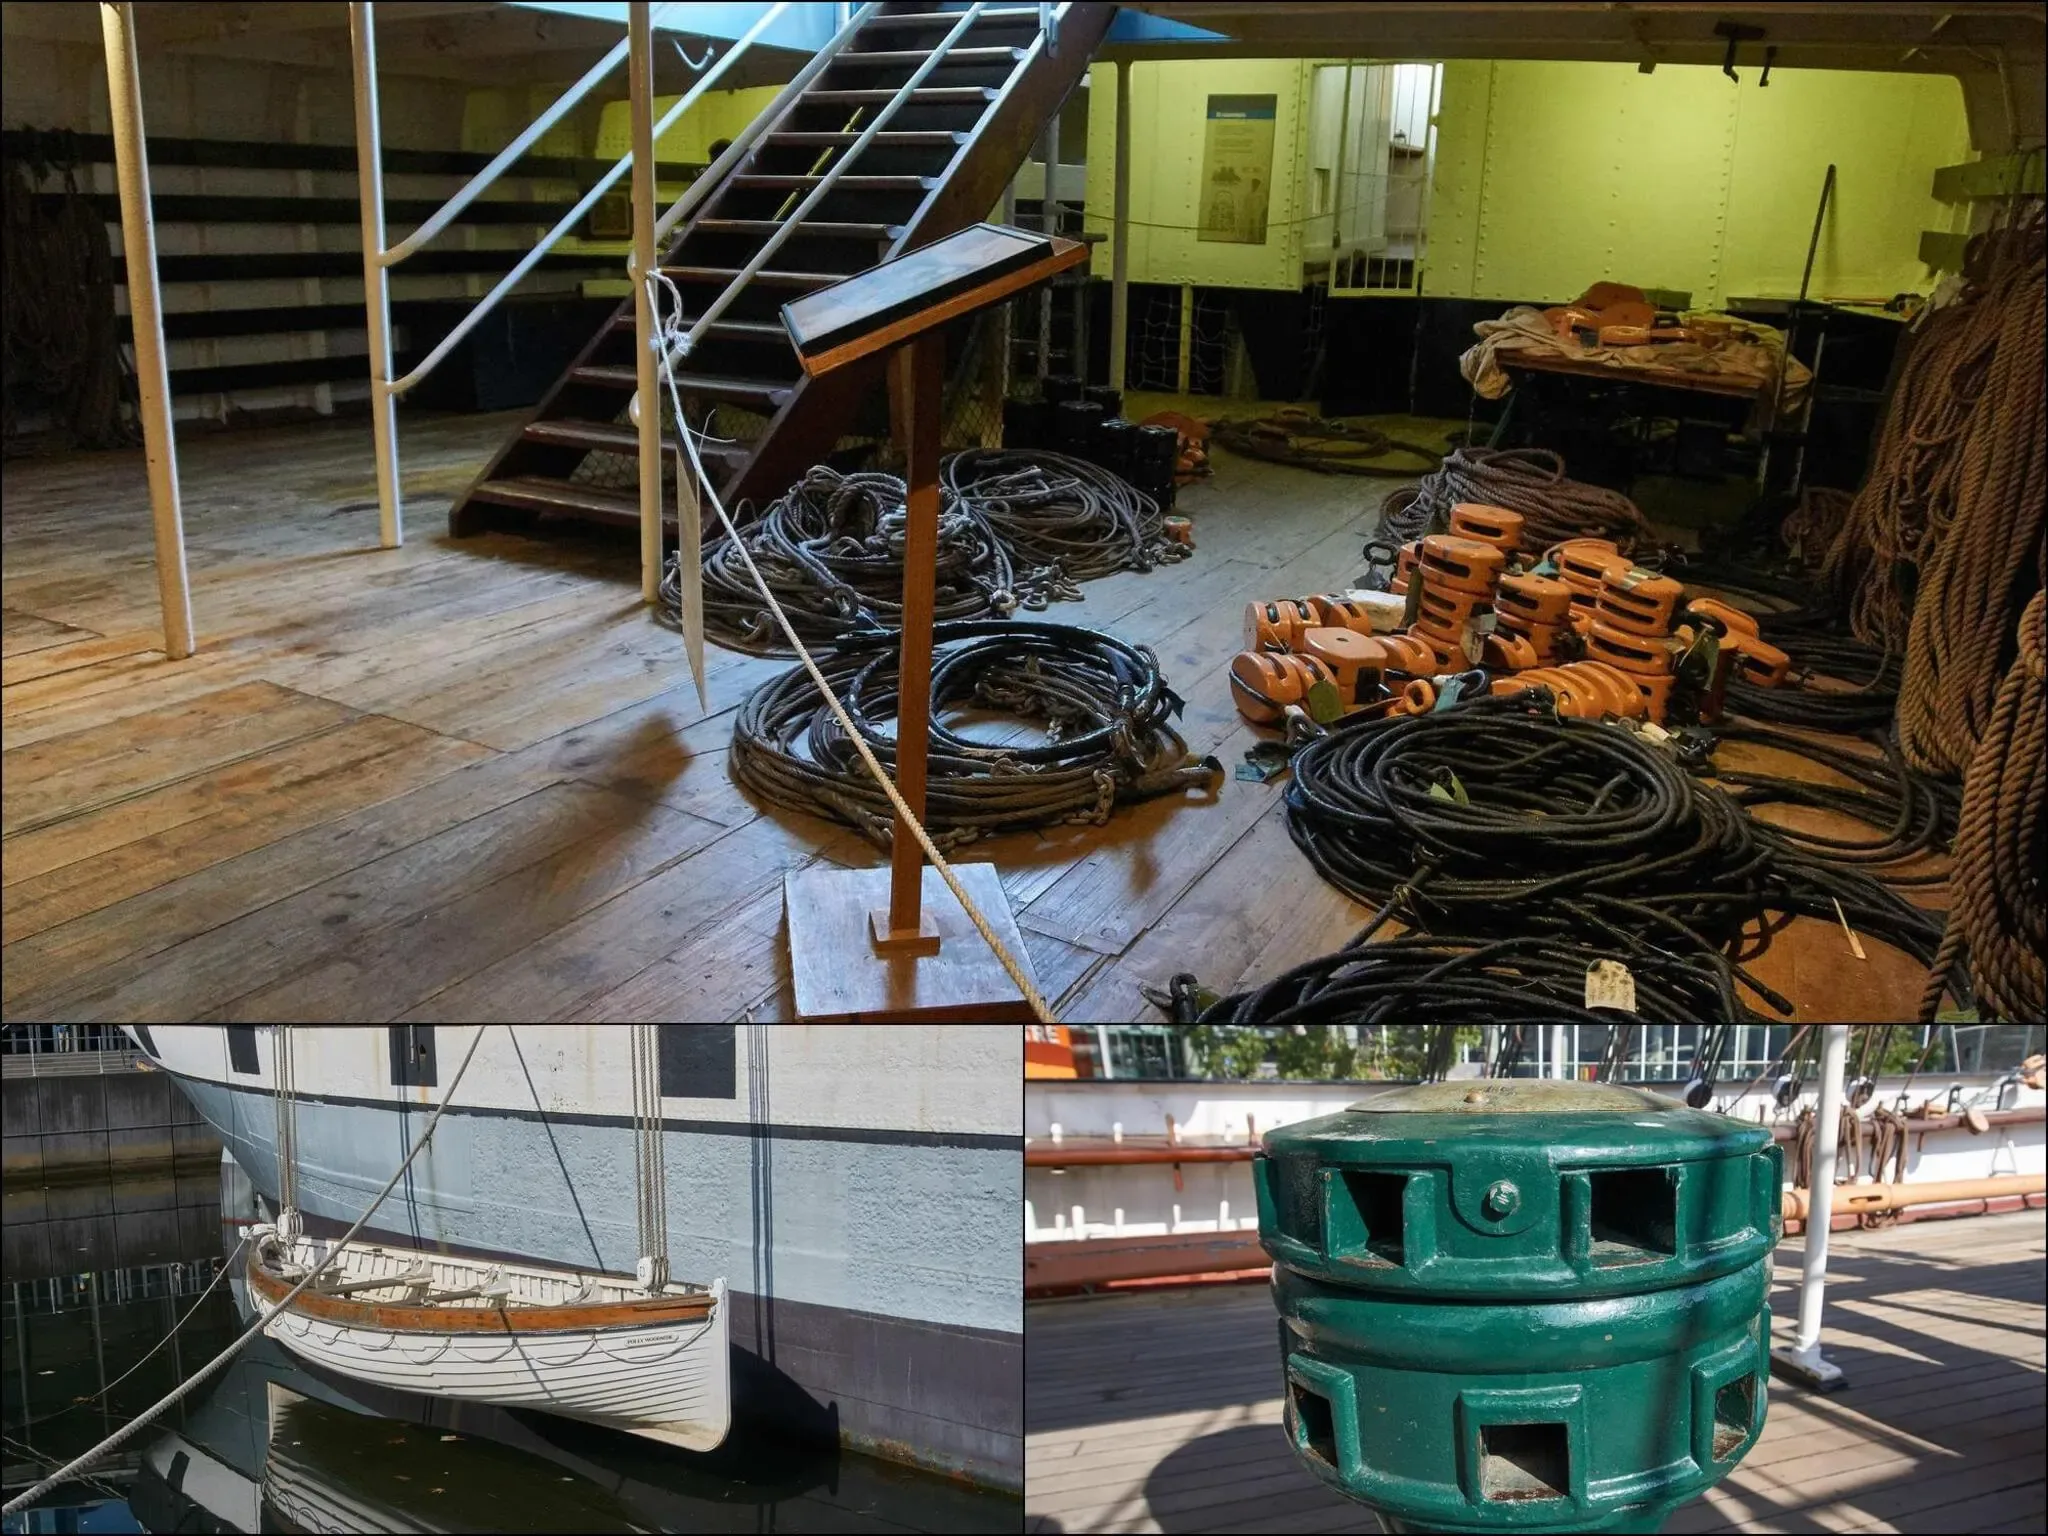 373 photos of Iron-Hulled Sailing Ship